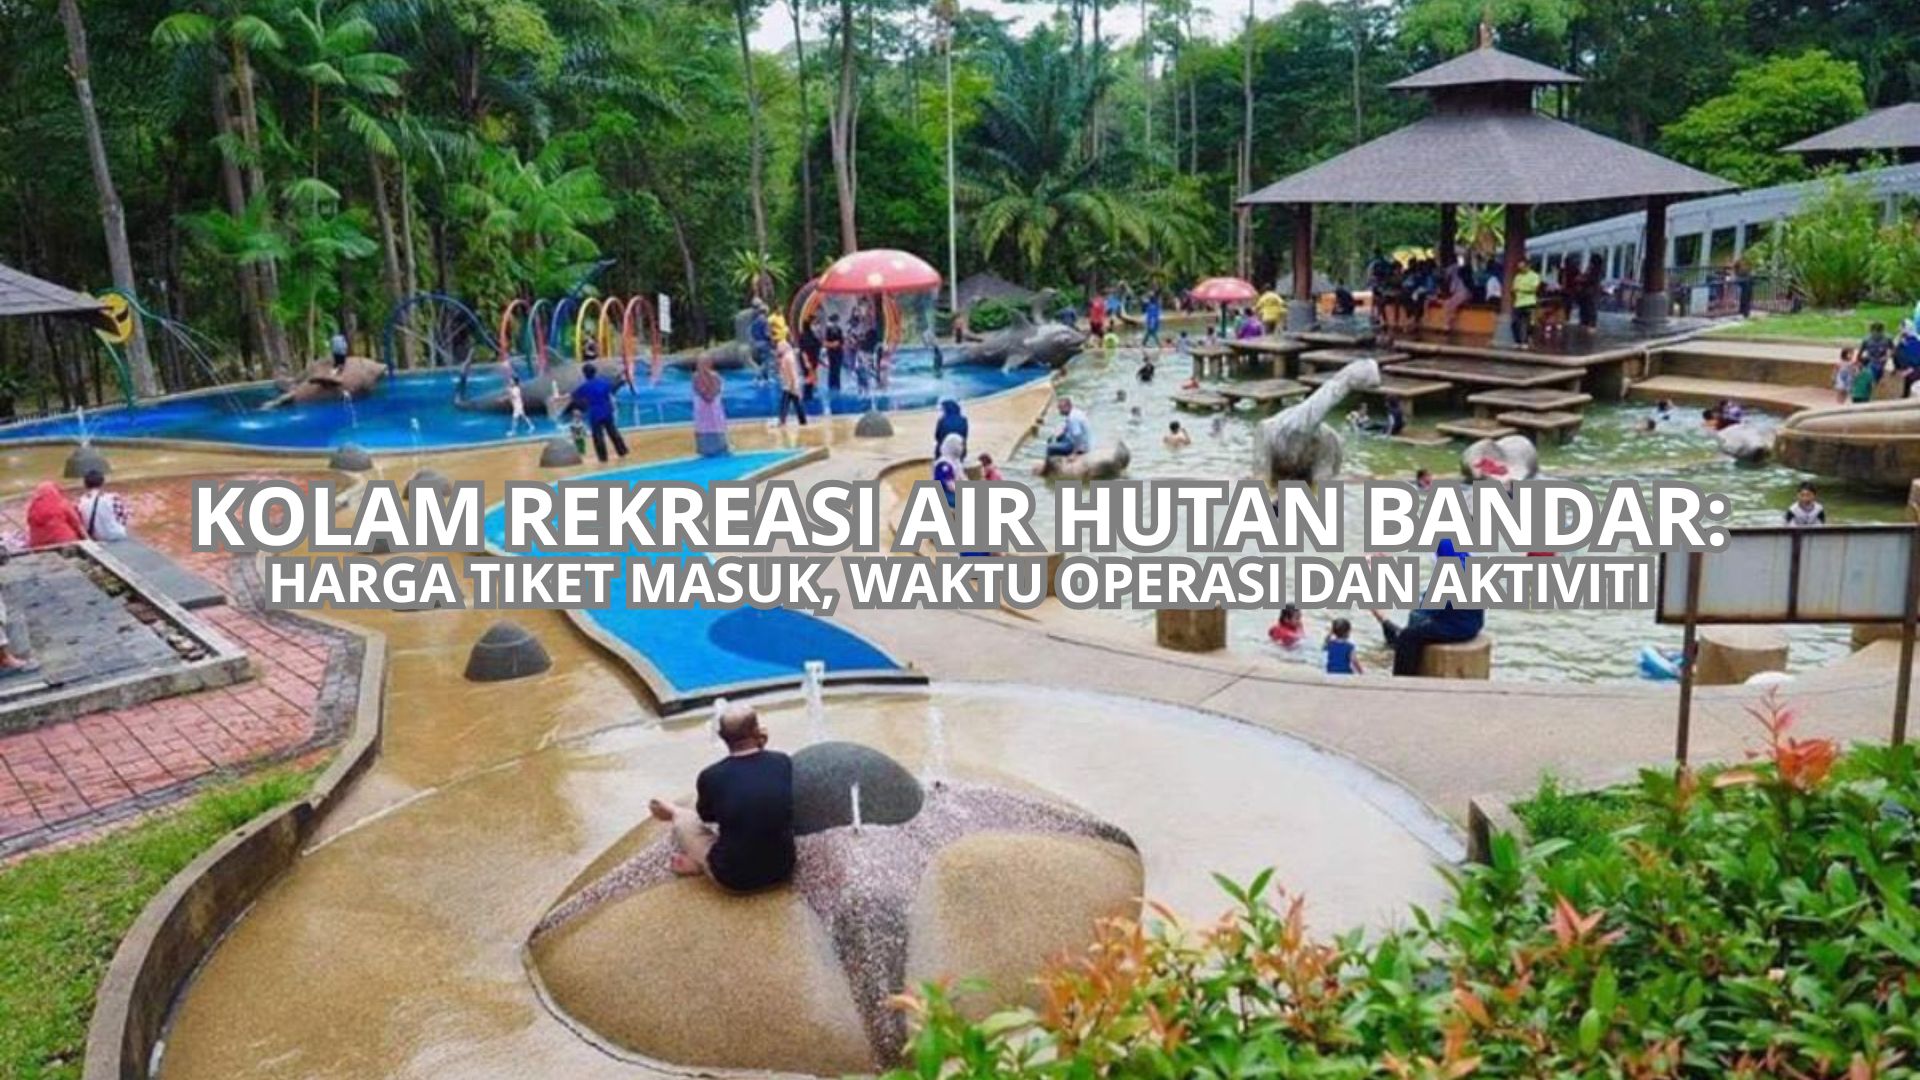 Kolam Rekreasi Air Hutan Bandar Cover